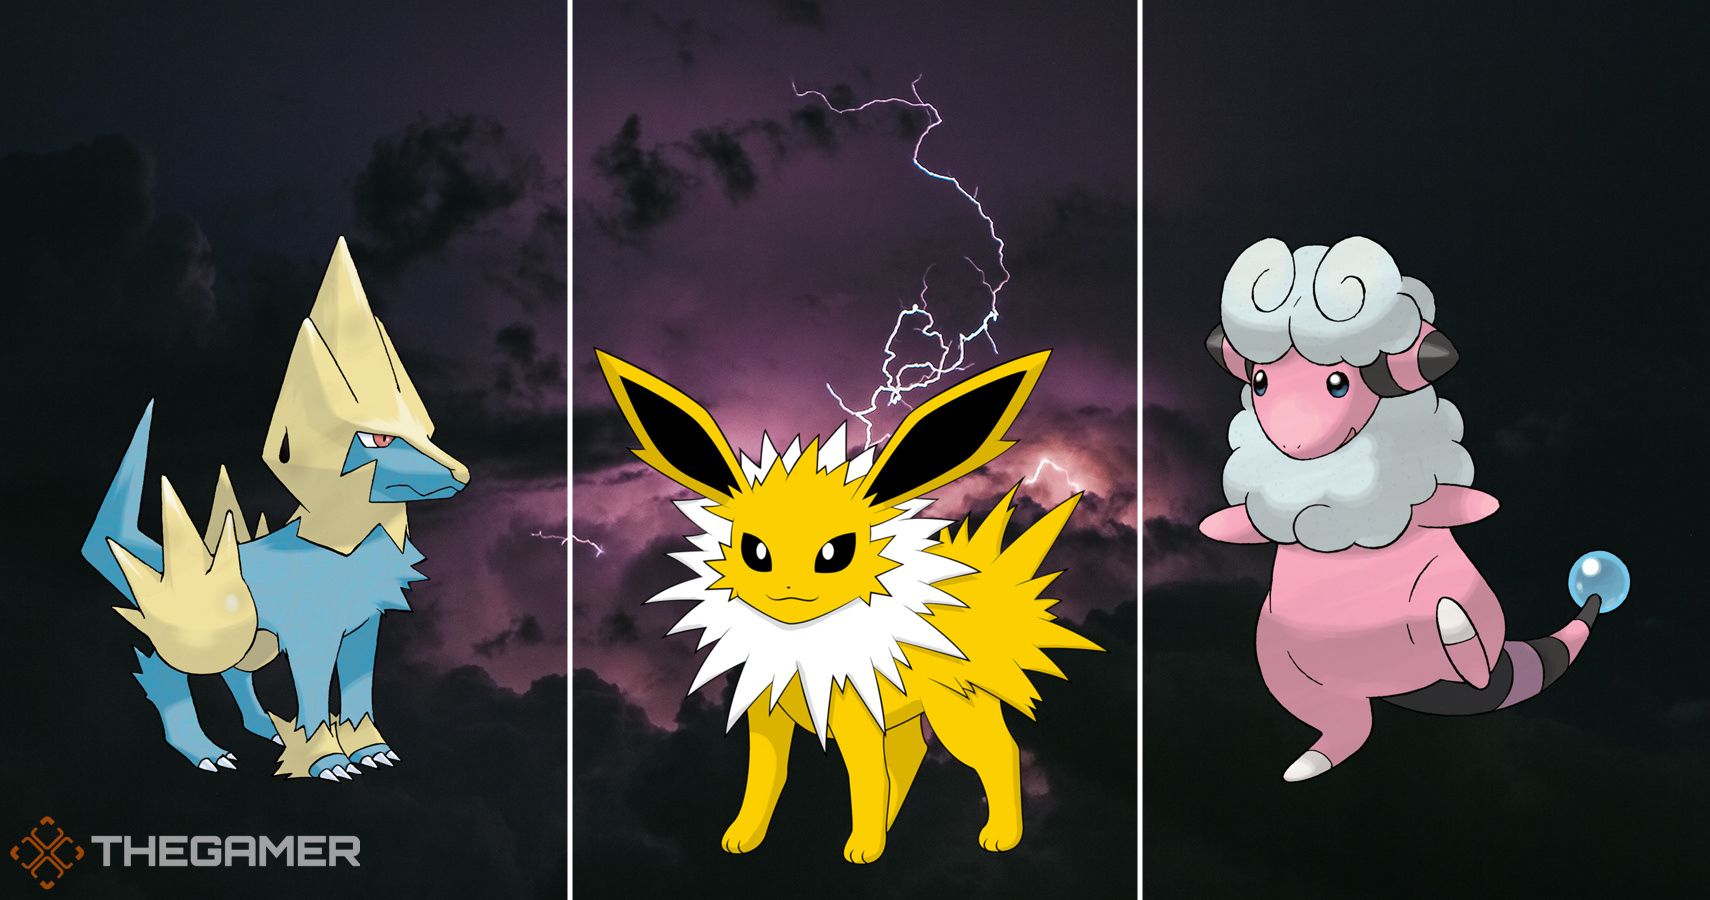 pokemon electric type names